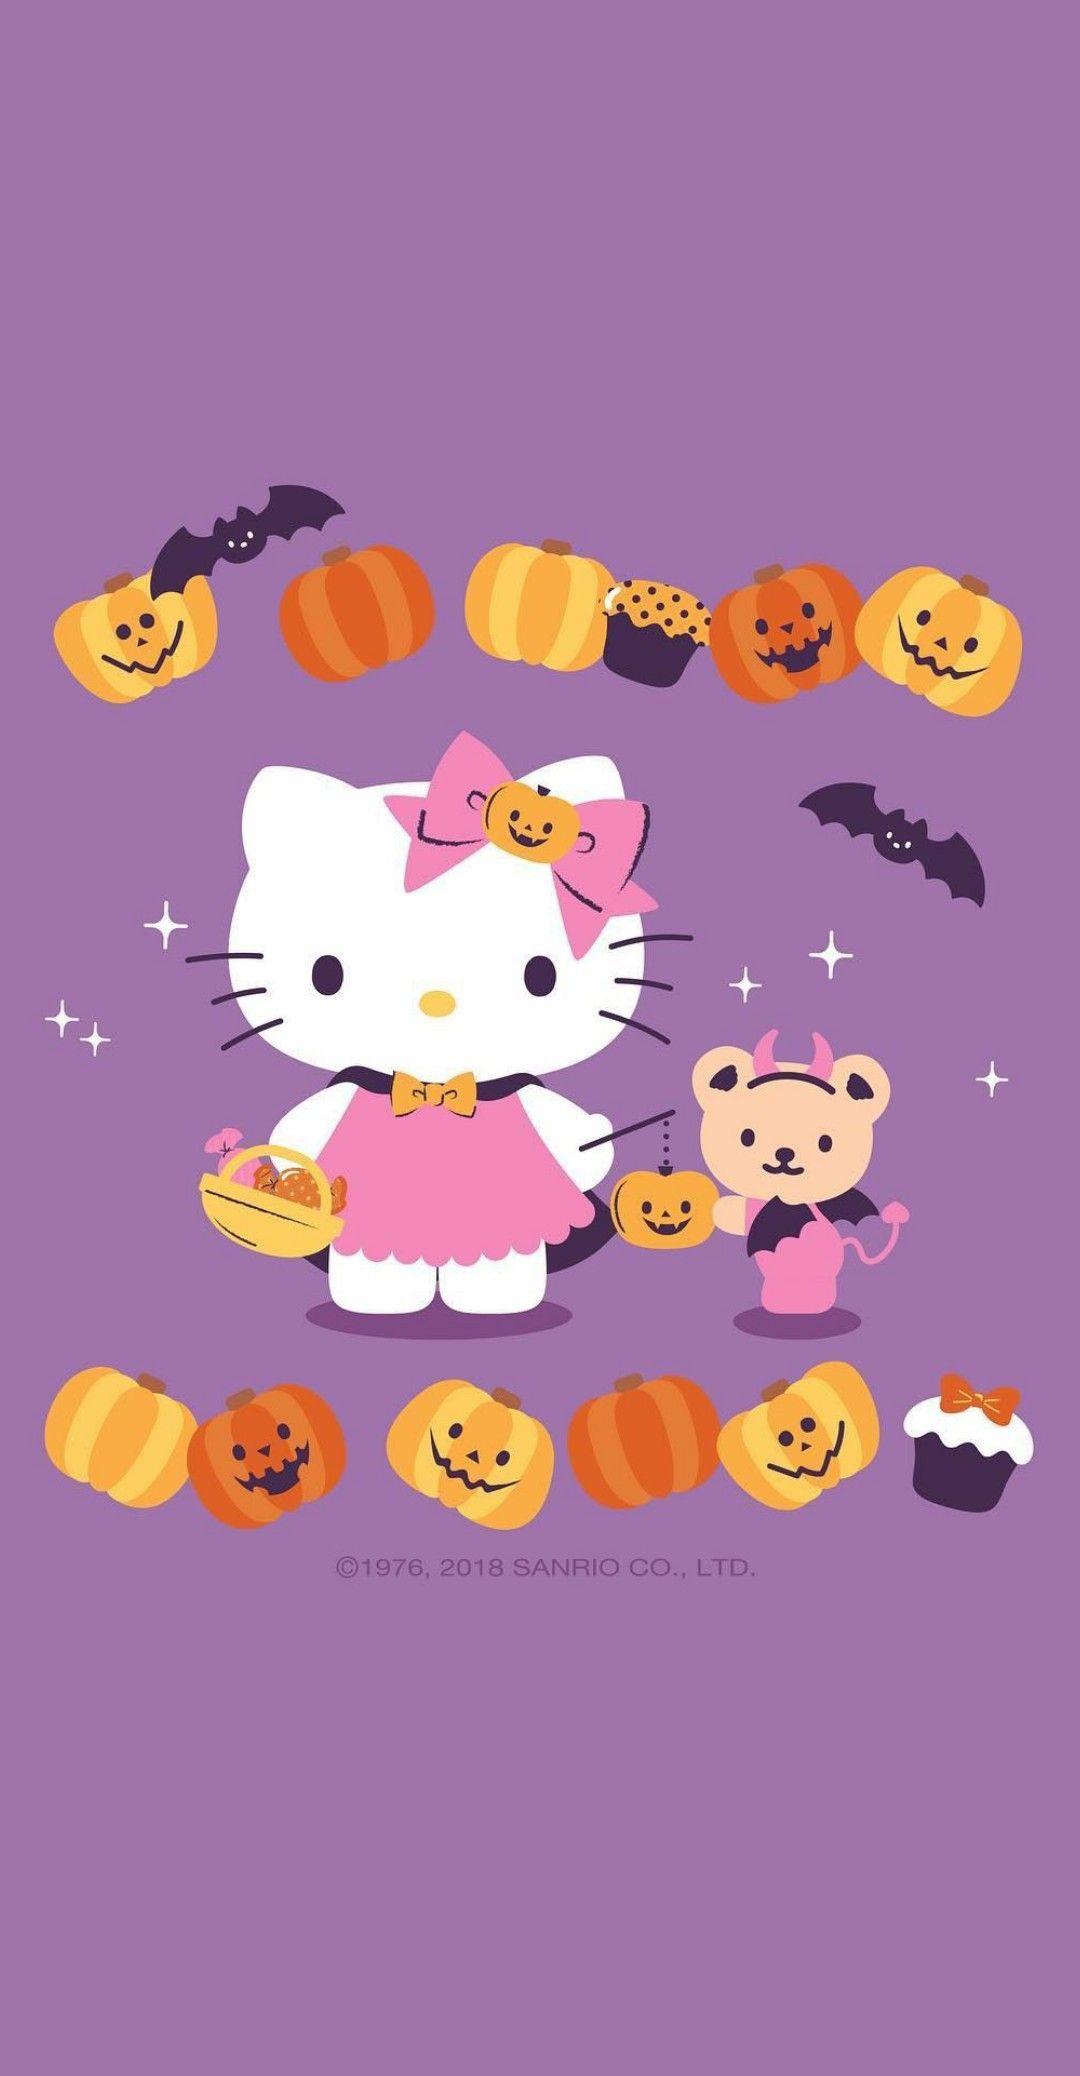 Wallpaper. By Artist Unknown. Hello kitty halloween wallpaper, Hello kitty iphone wallpaper, Hello kitty halloween